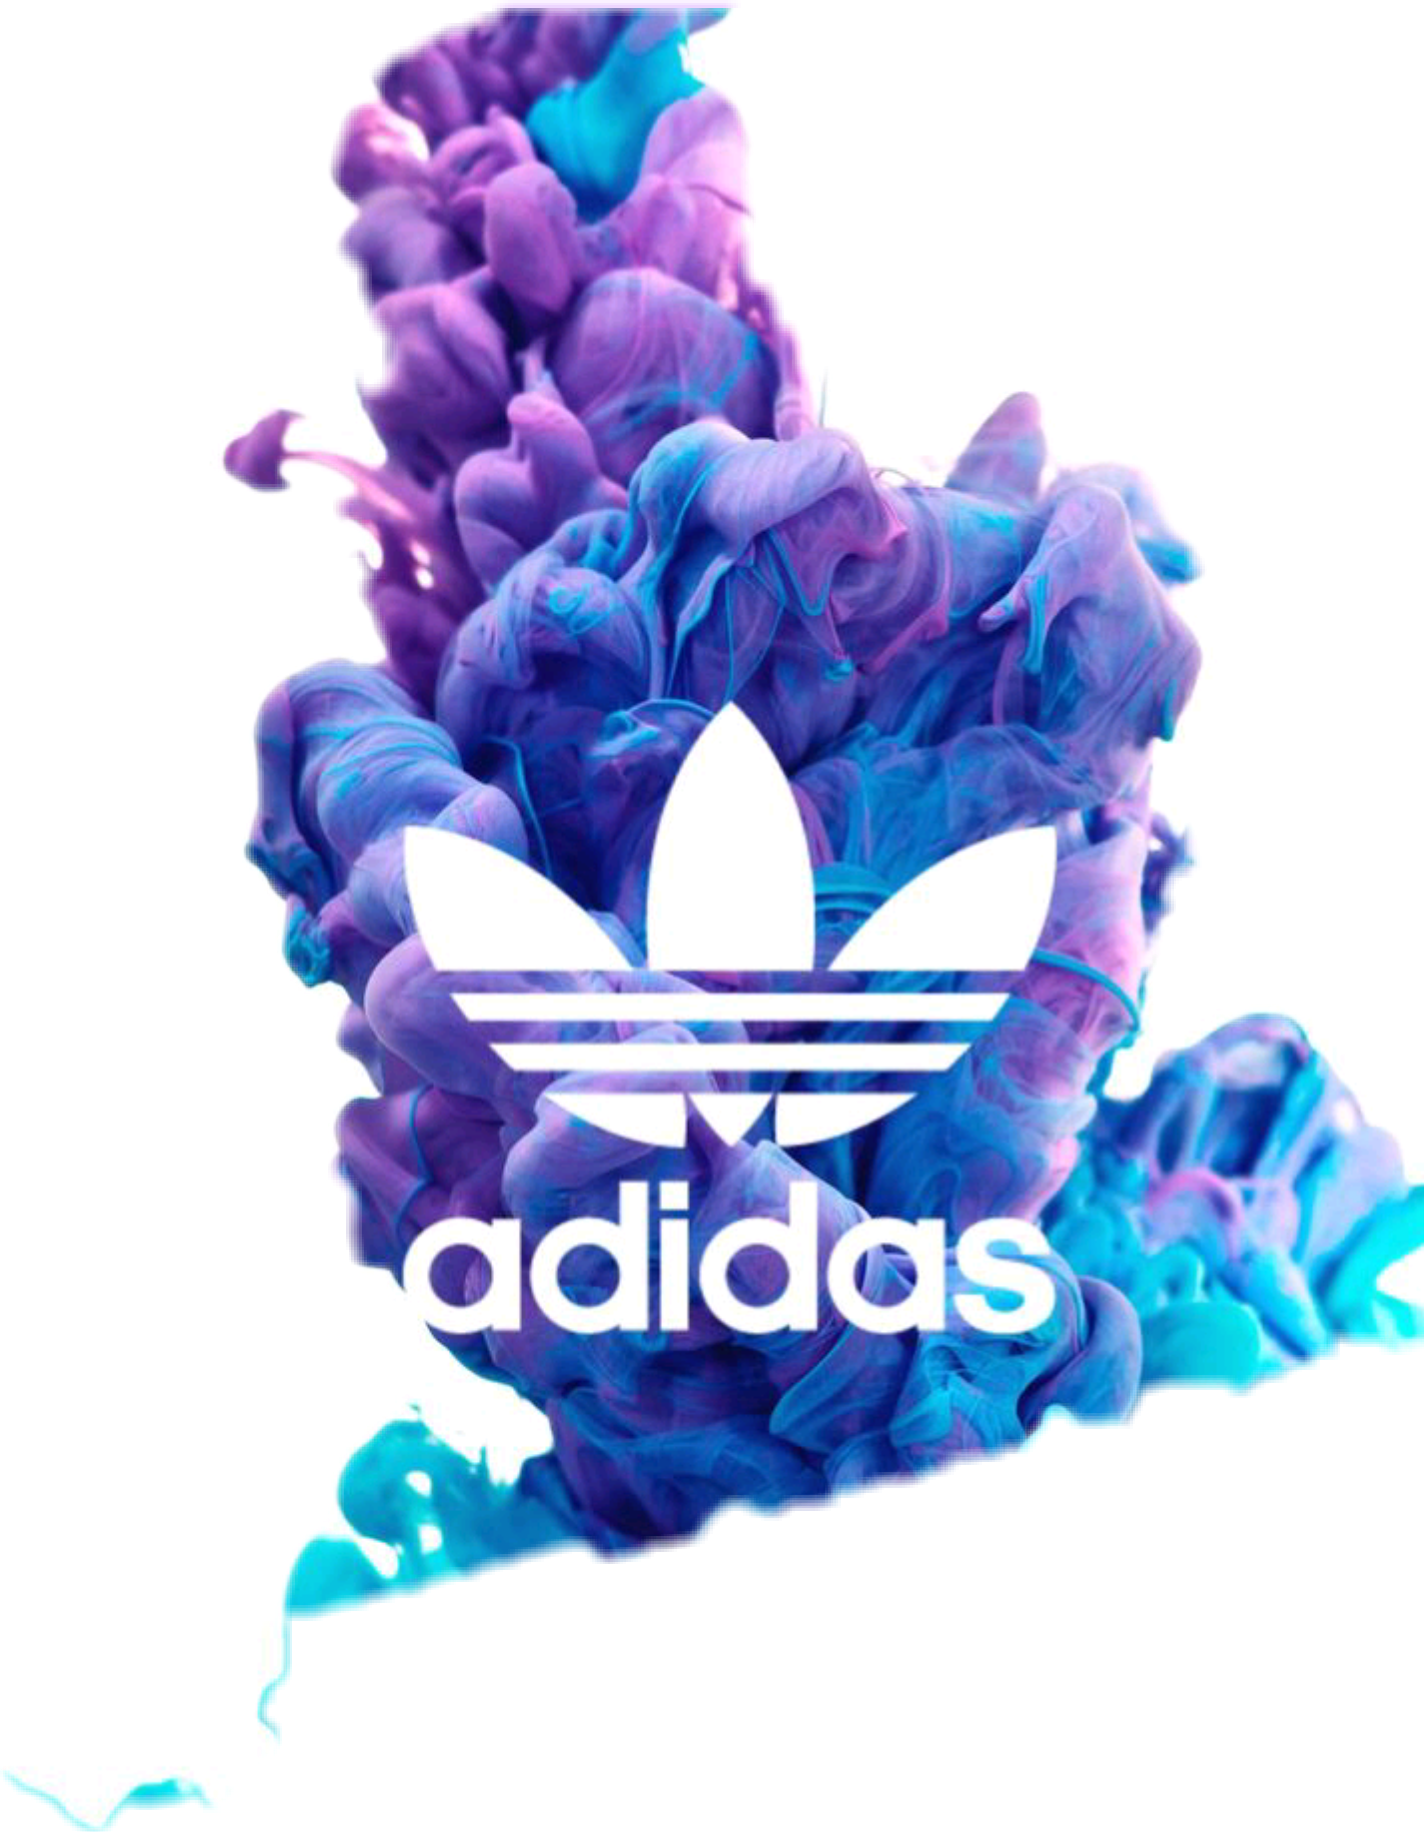 adidas logo, vintage, set PNG images for editing